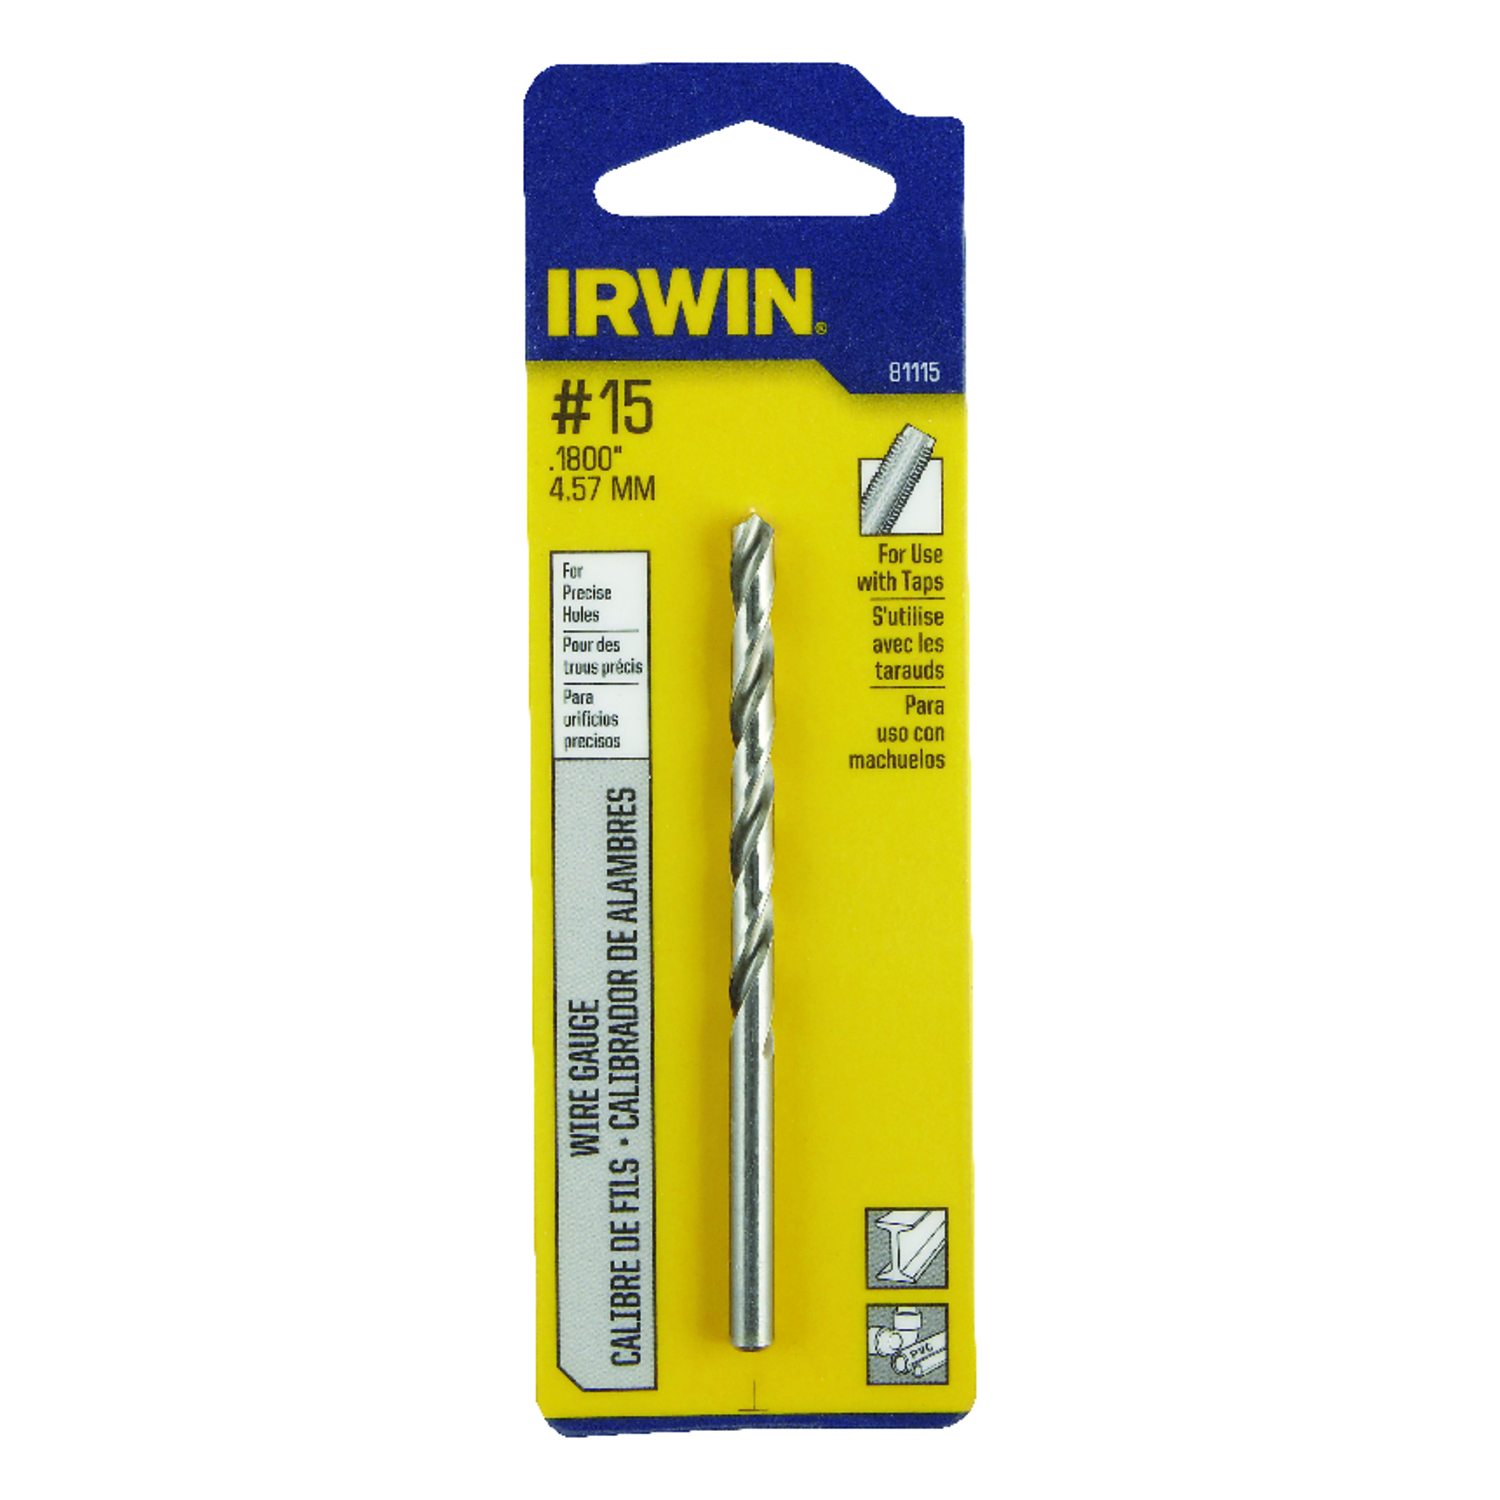 Irwin #15 X 3-3/8 in. L High Speed Steel Wire Gauge Bit 1 pc